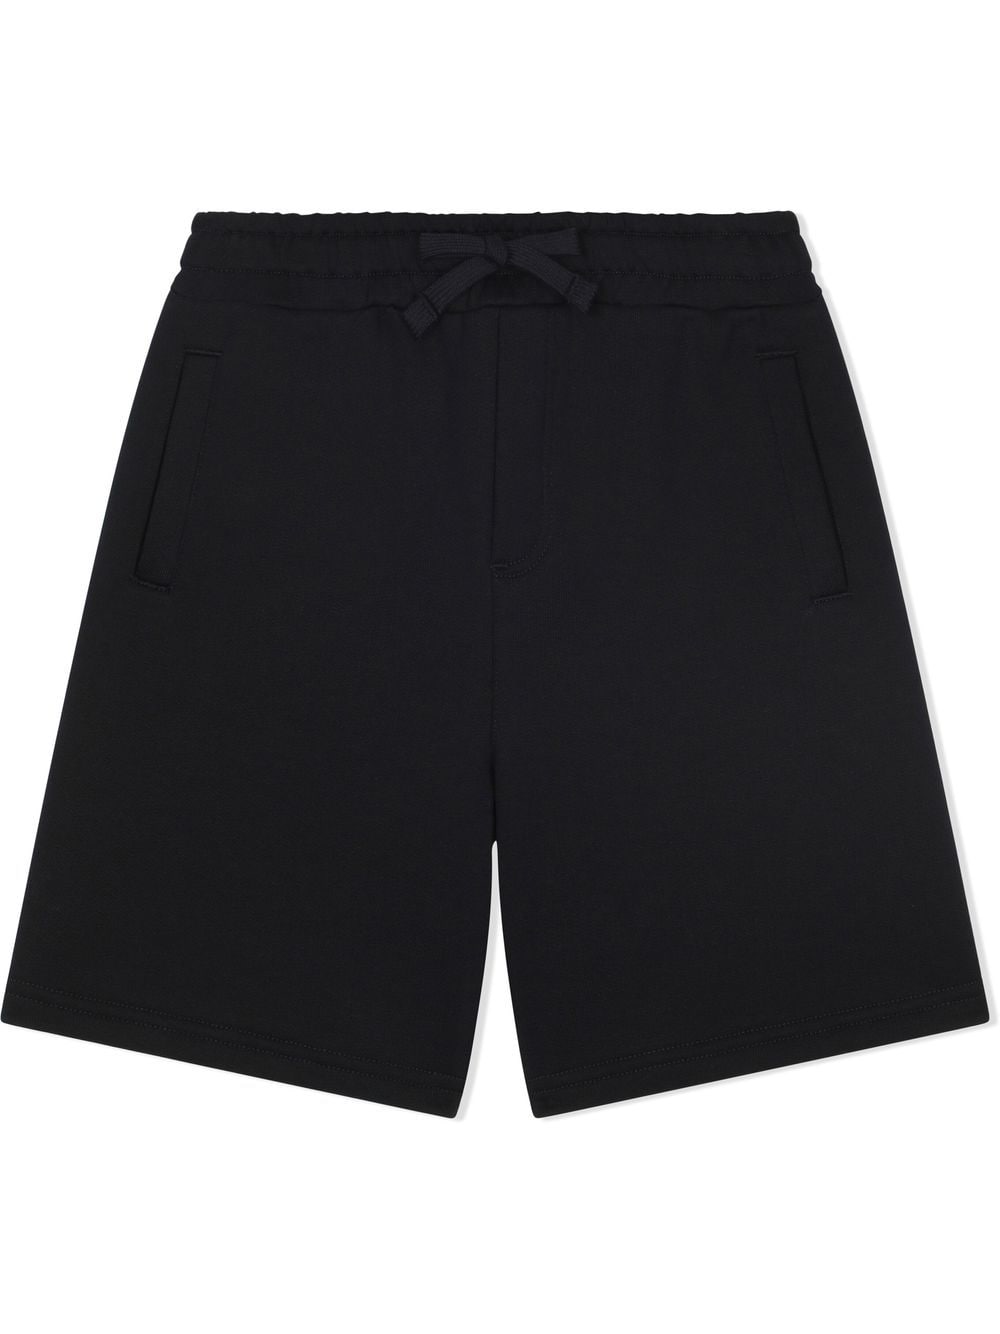 Heraldic patch bermuda shorts Farfetch Boys Clothing Shorts Bermudas Black 